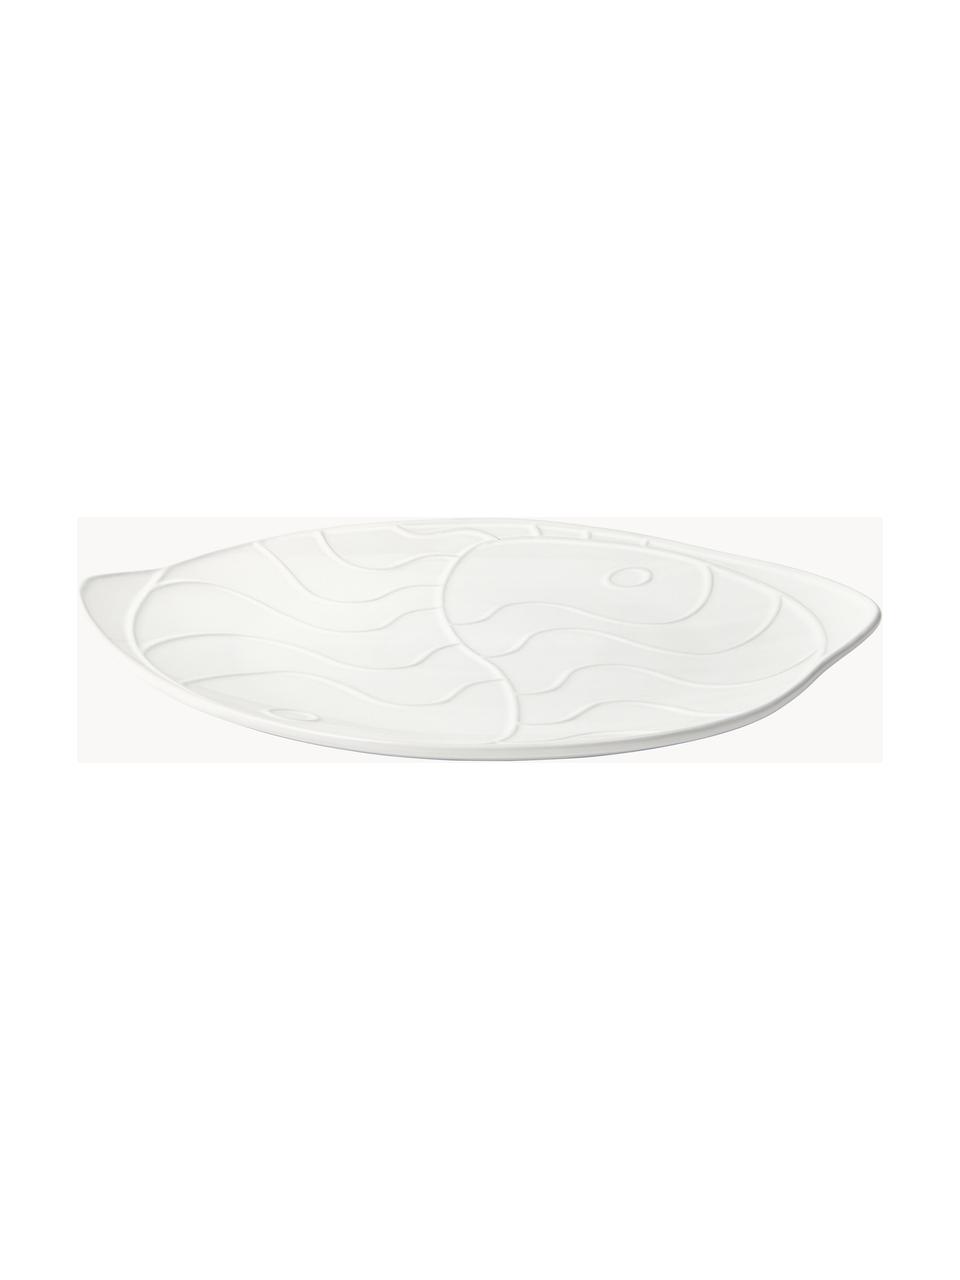 Plat de service Pesce, Grès cérame, Blanc, larg. 35 x long. 31 cm